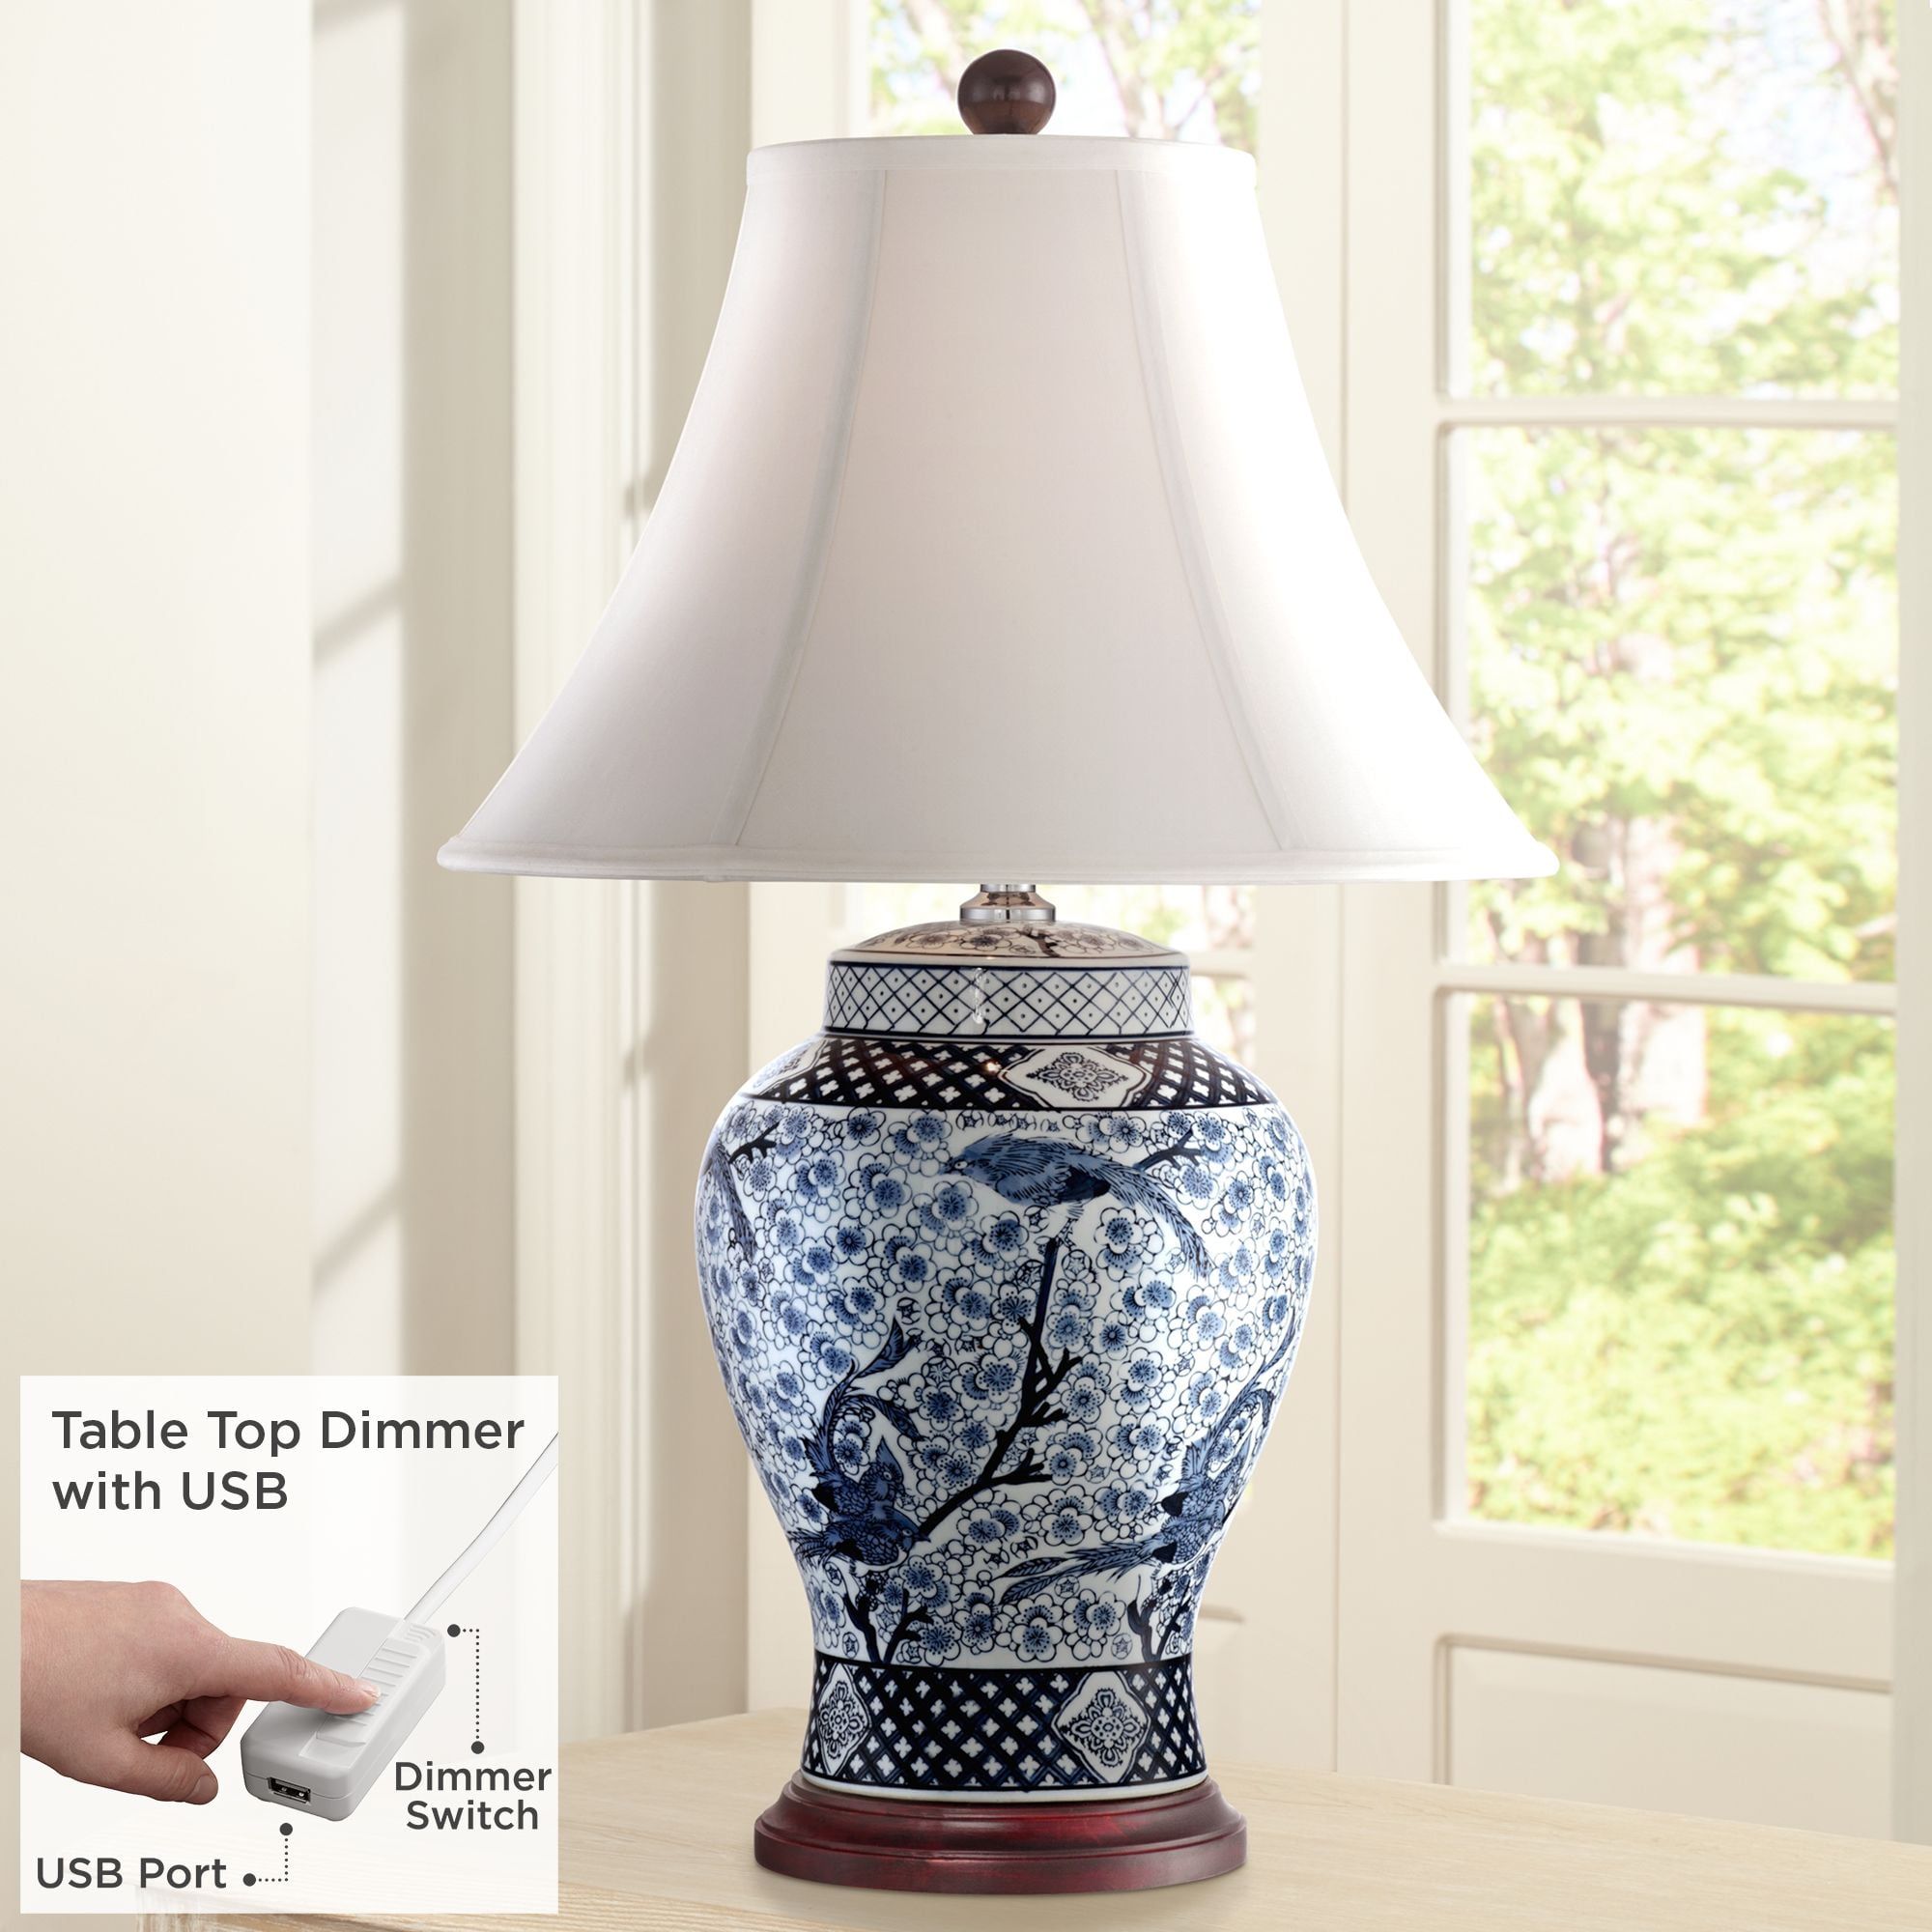 Vintage creamy white ceramic ginger jar vase lamp with floral pattern and Hummingbirds